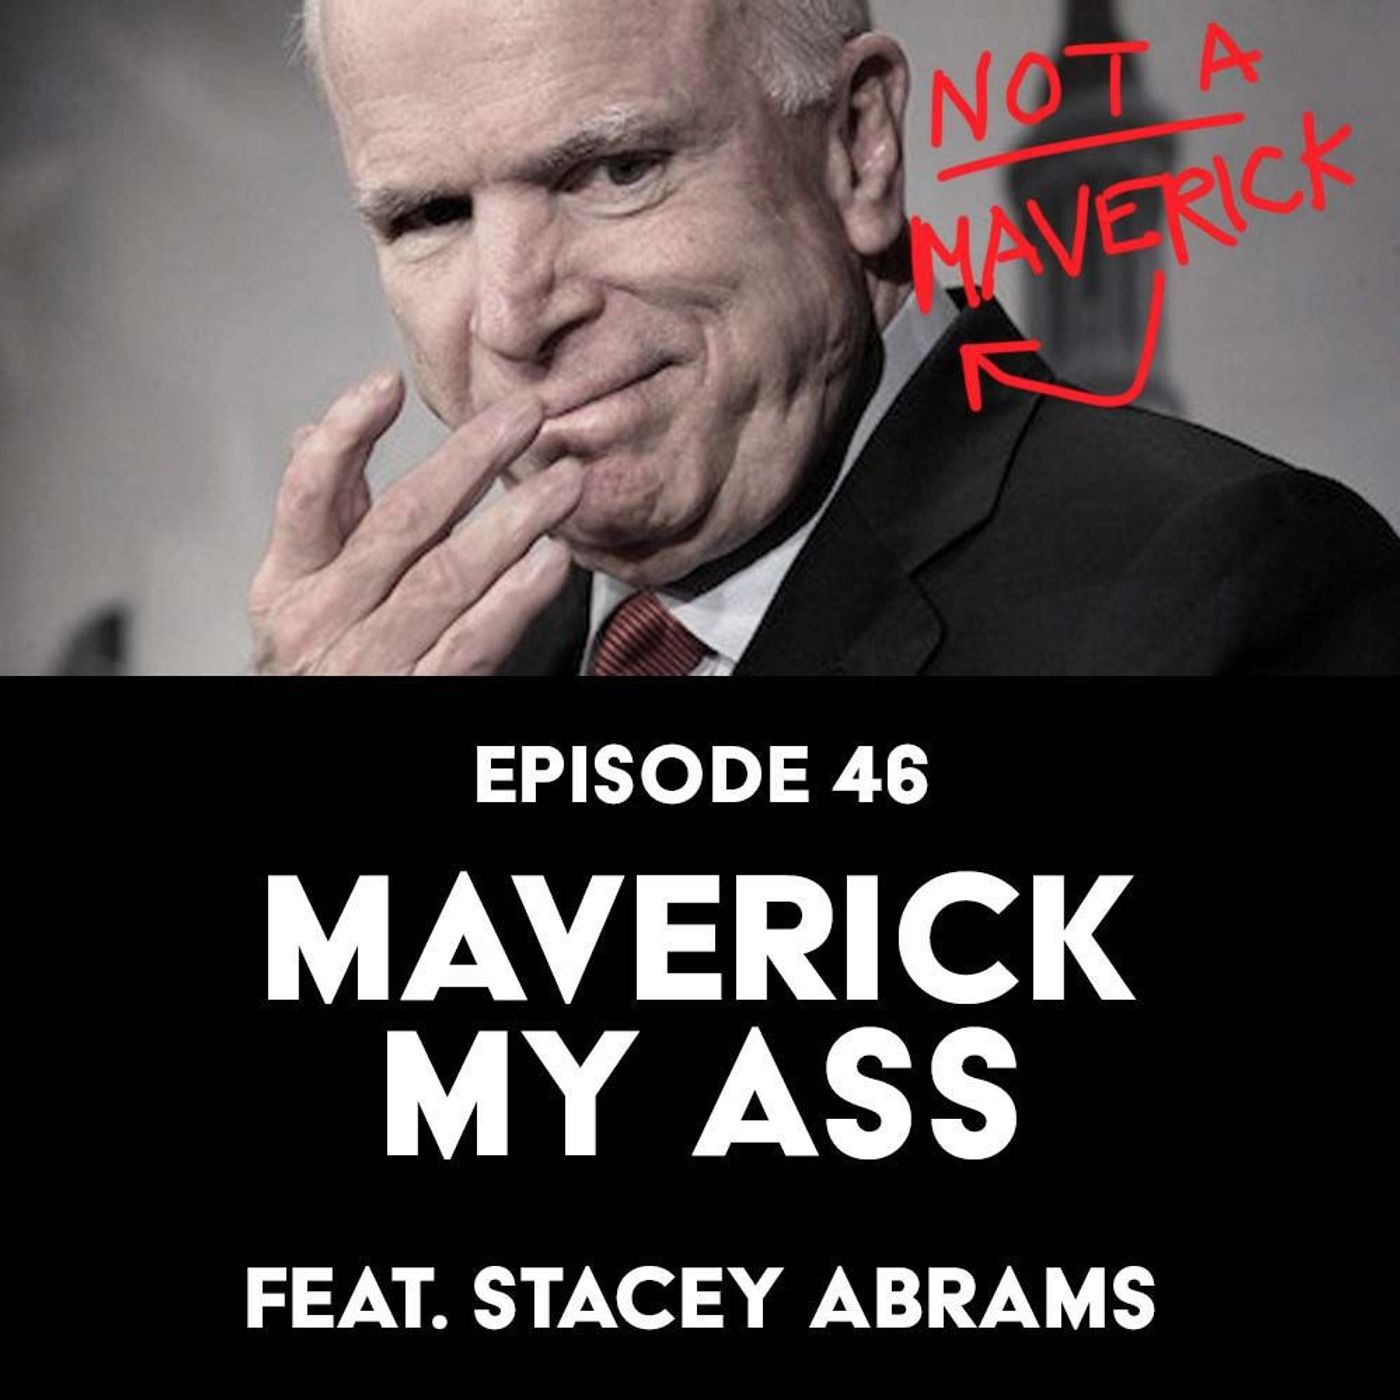 S1 Ep46: Maverick My Ass f/ Stacey Abrams